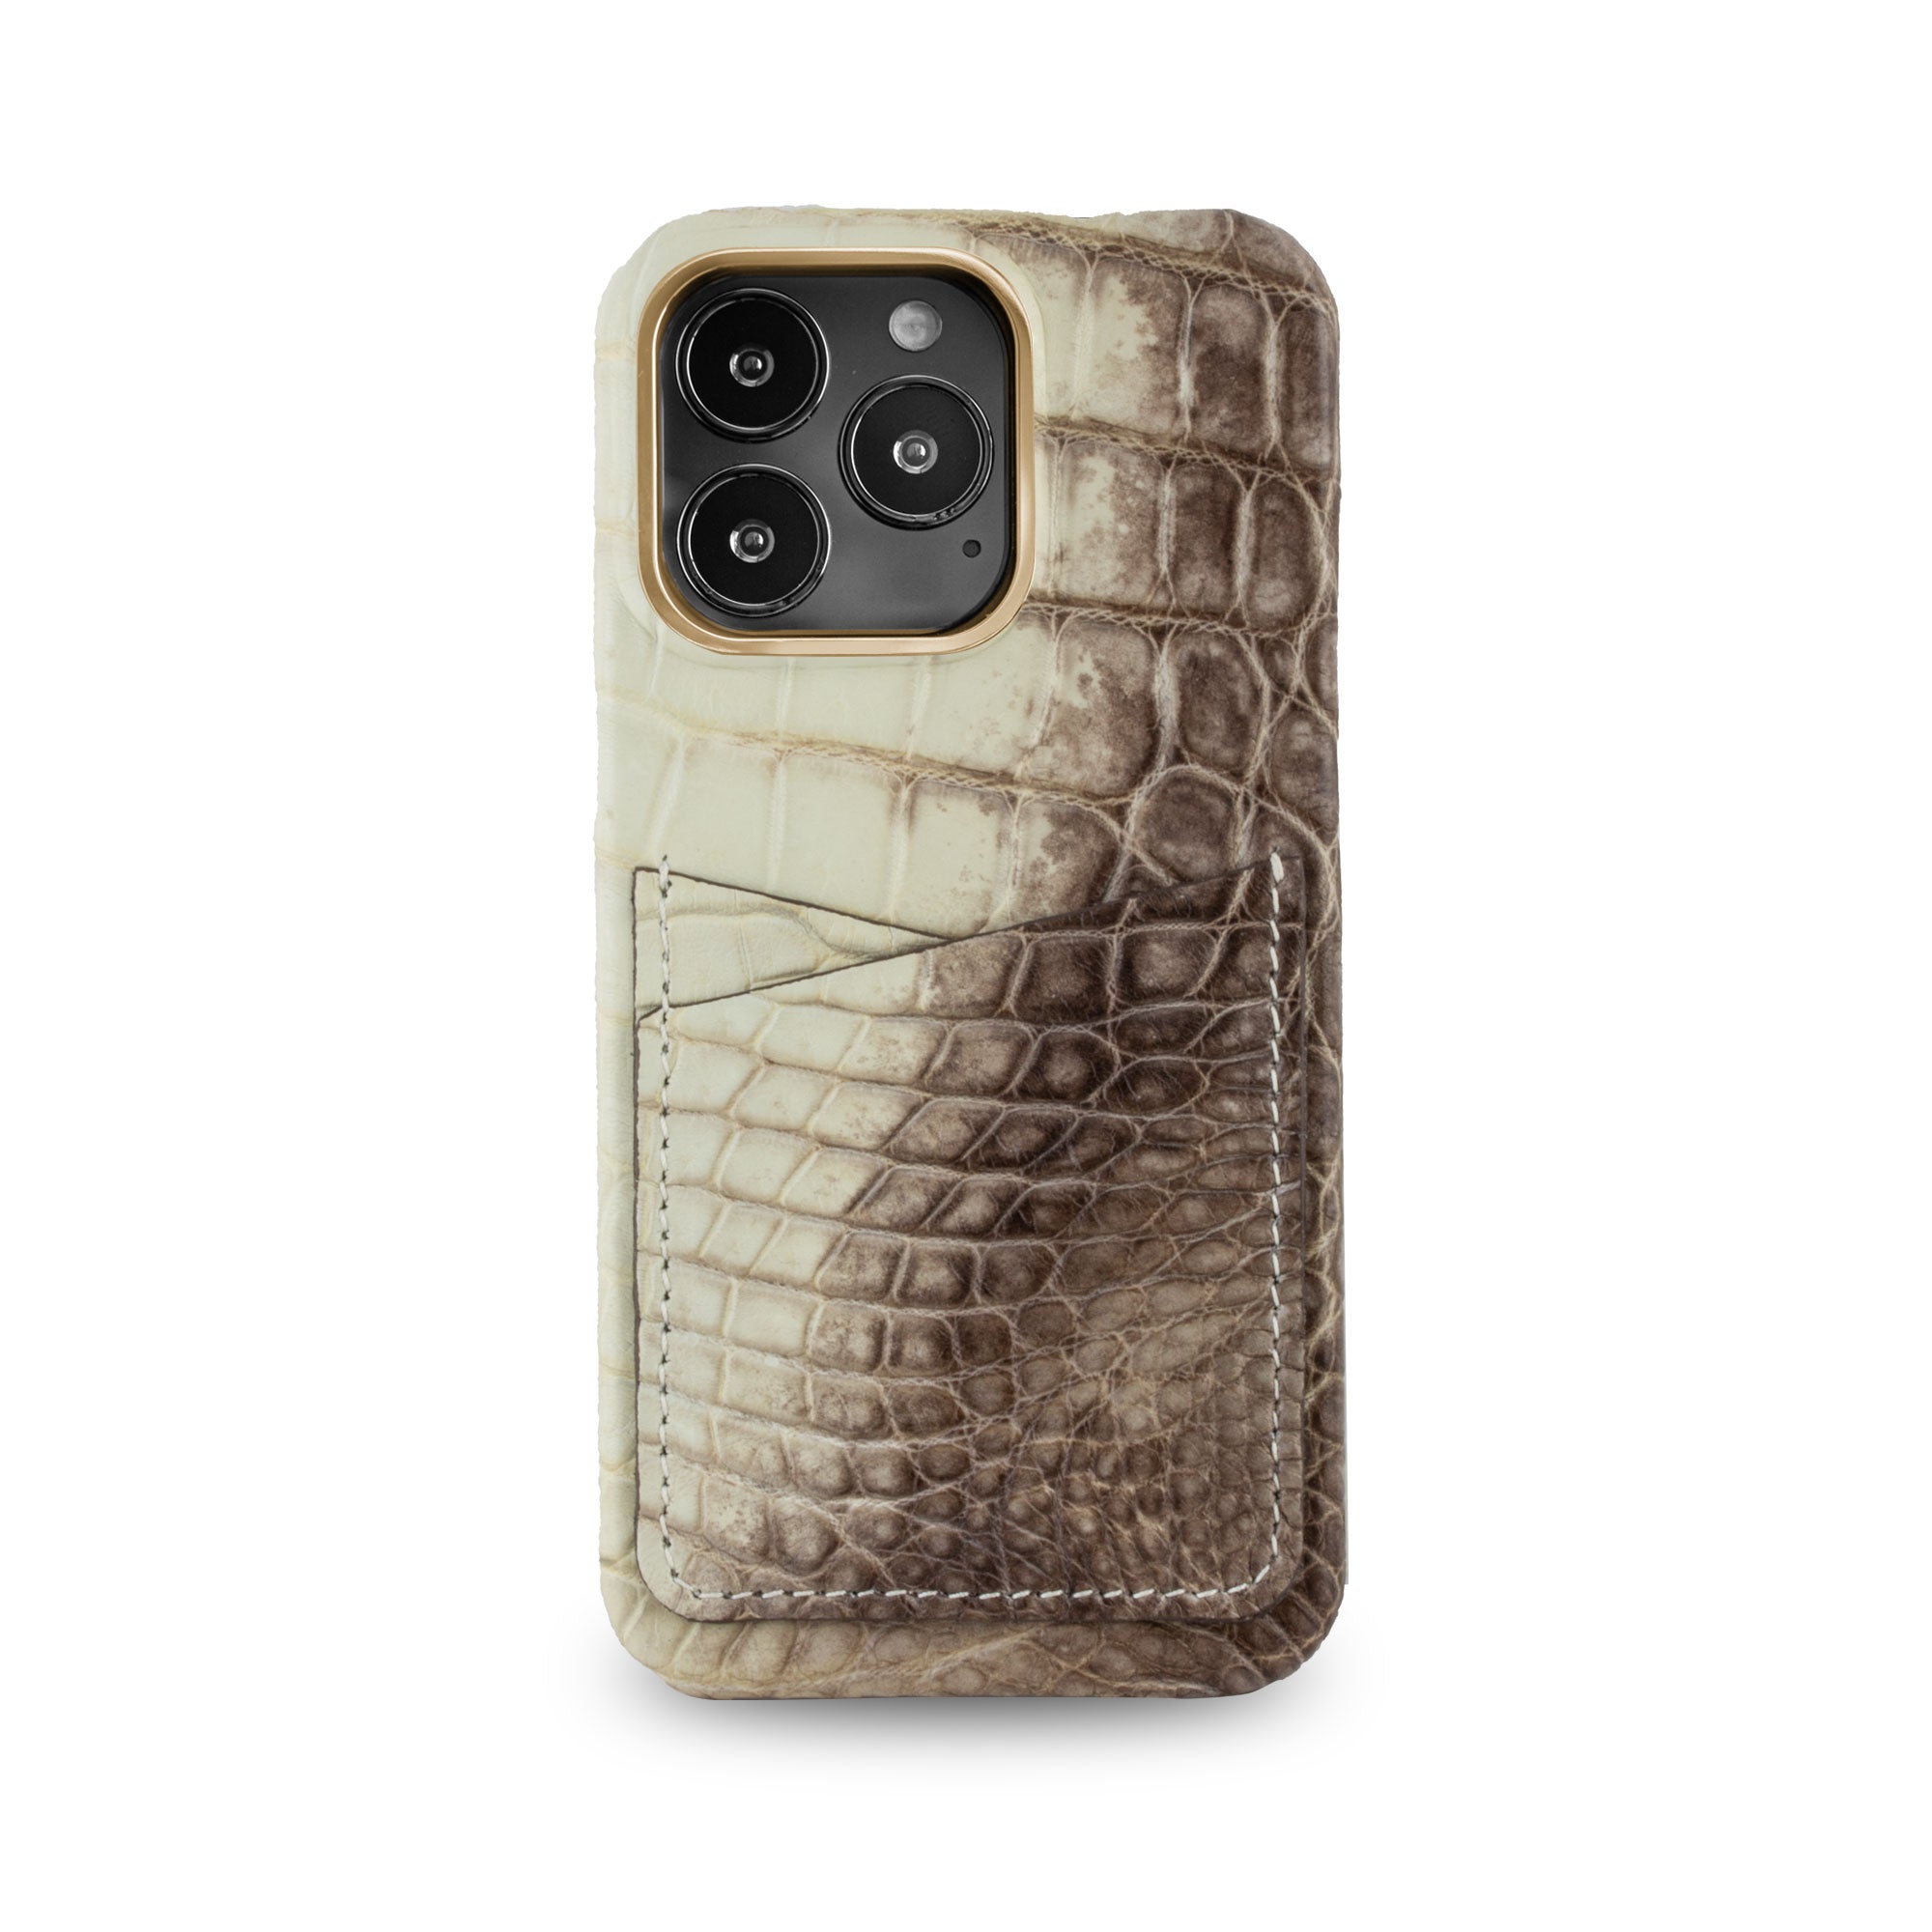 Leather iPhone HIMALAYA "Card case" / cover - iPhone 15, 14 & 13  Pro / Pro Max ) - Genuine crocodile